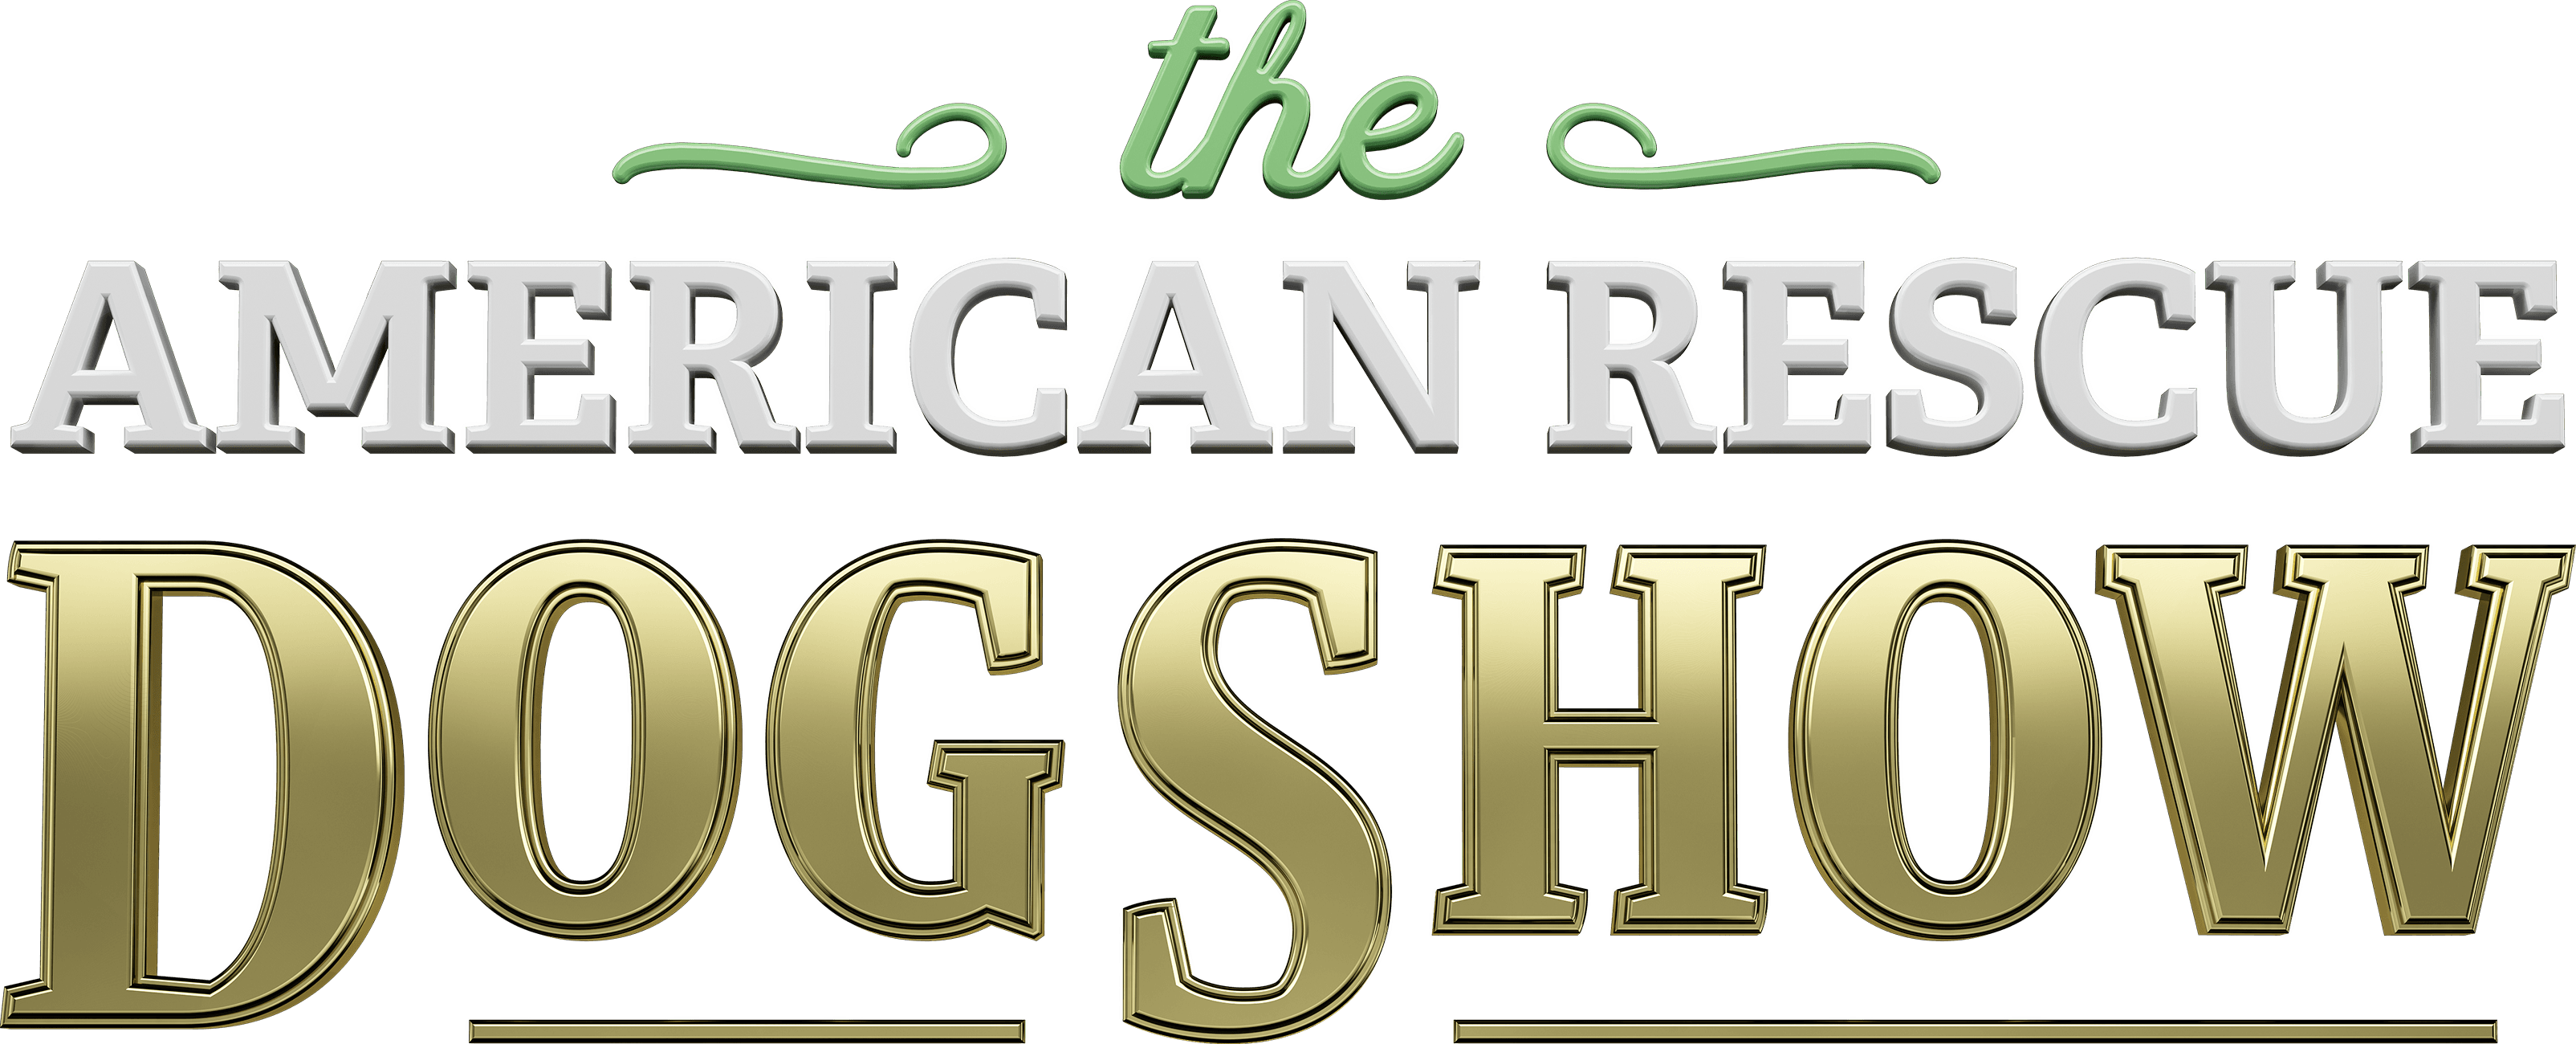 2022 American Rescue Dog Show logo